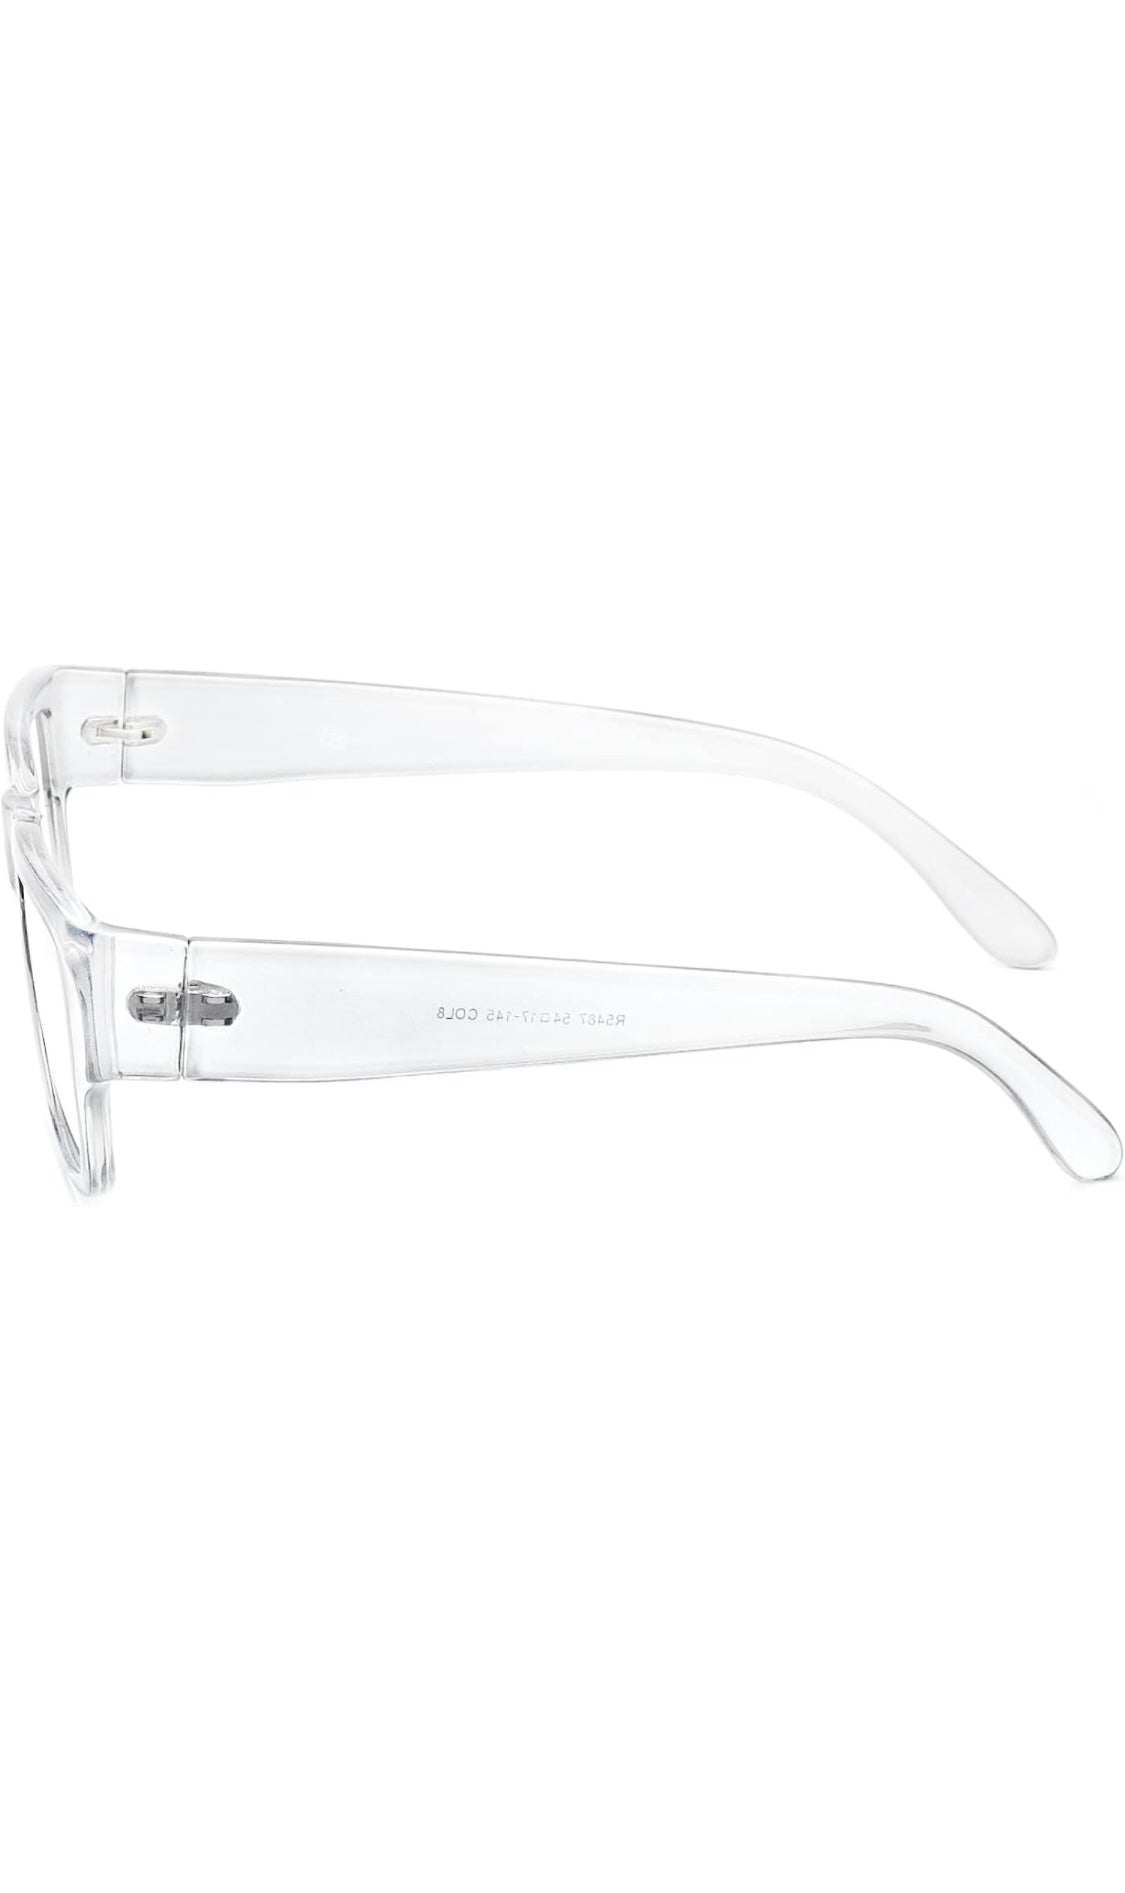 Jodykoes Thick Frame Unisex Anti Glare Eyeglasses Eyewear Spectacle (Transparent) - Jodykoes ®